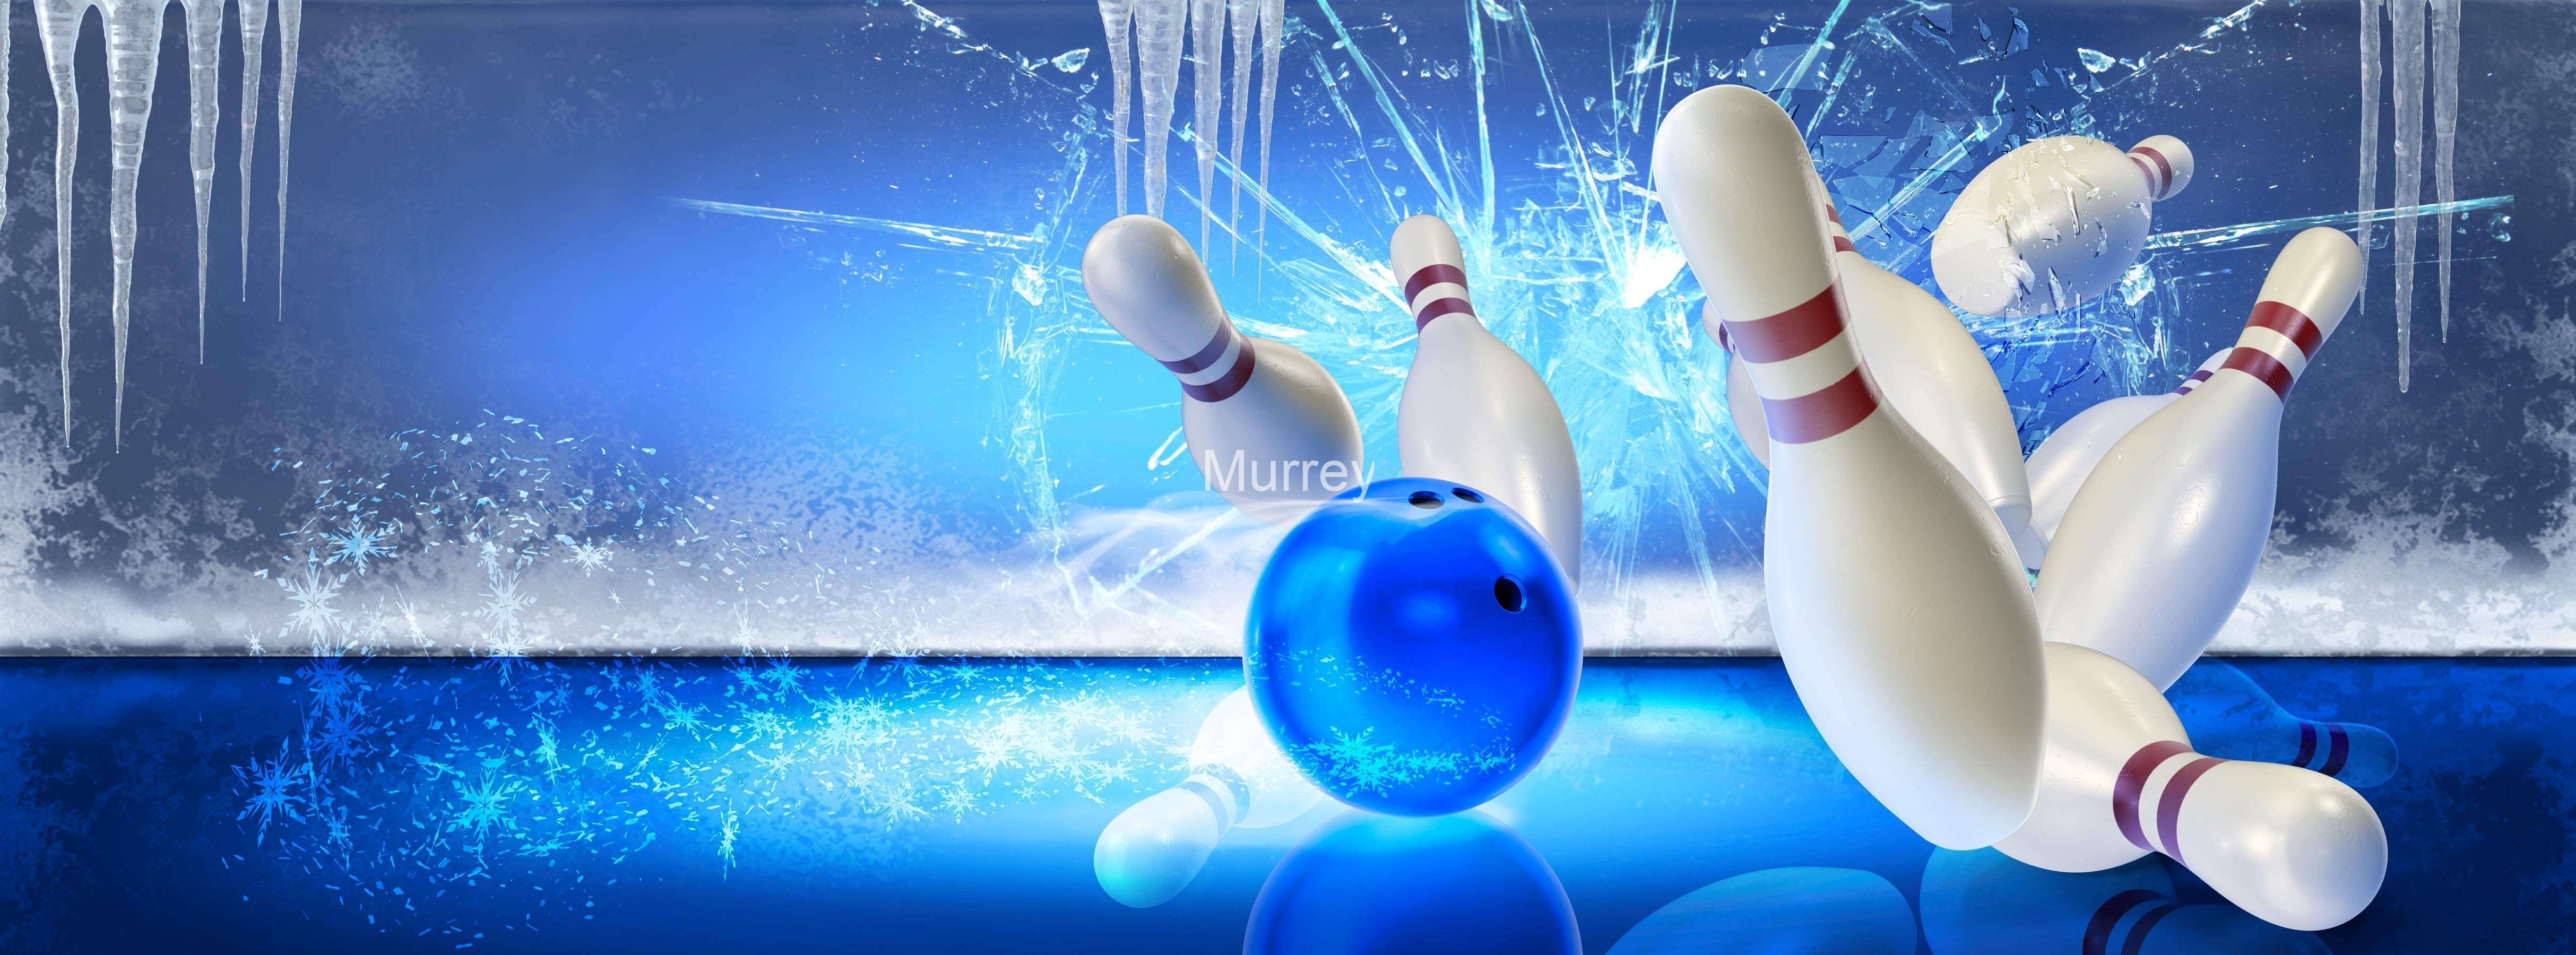 HD wallpaper: bowling balls hitting pins, leisure activities, no people,  indoors | Wallpaper Flare